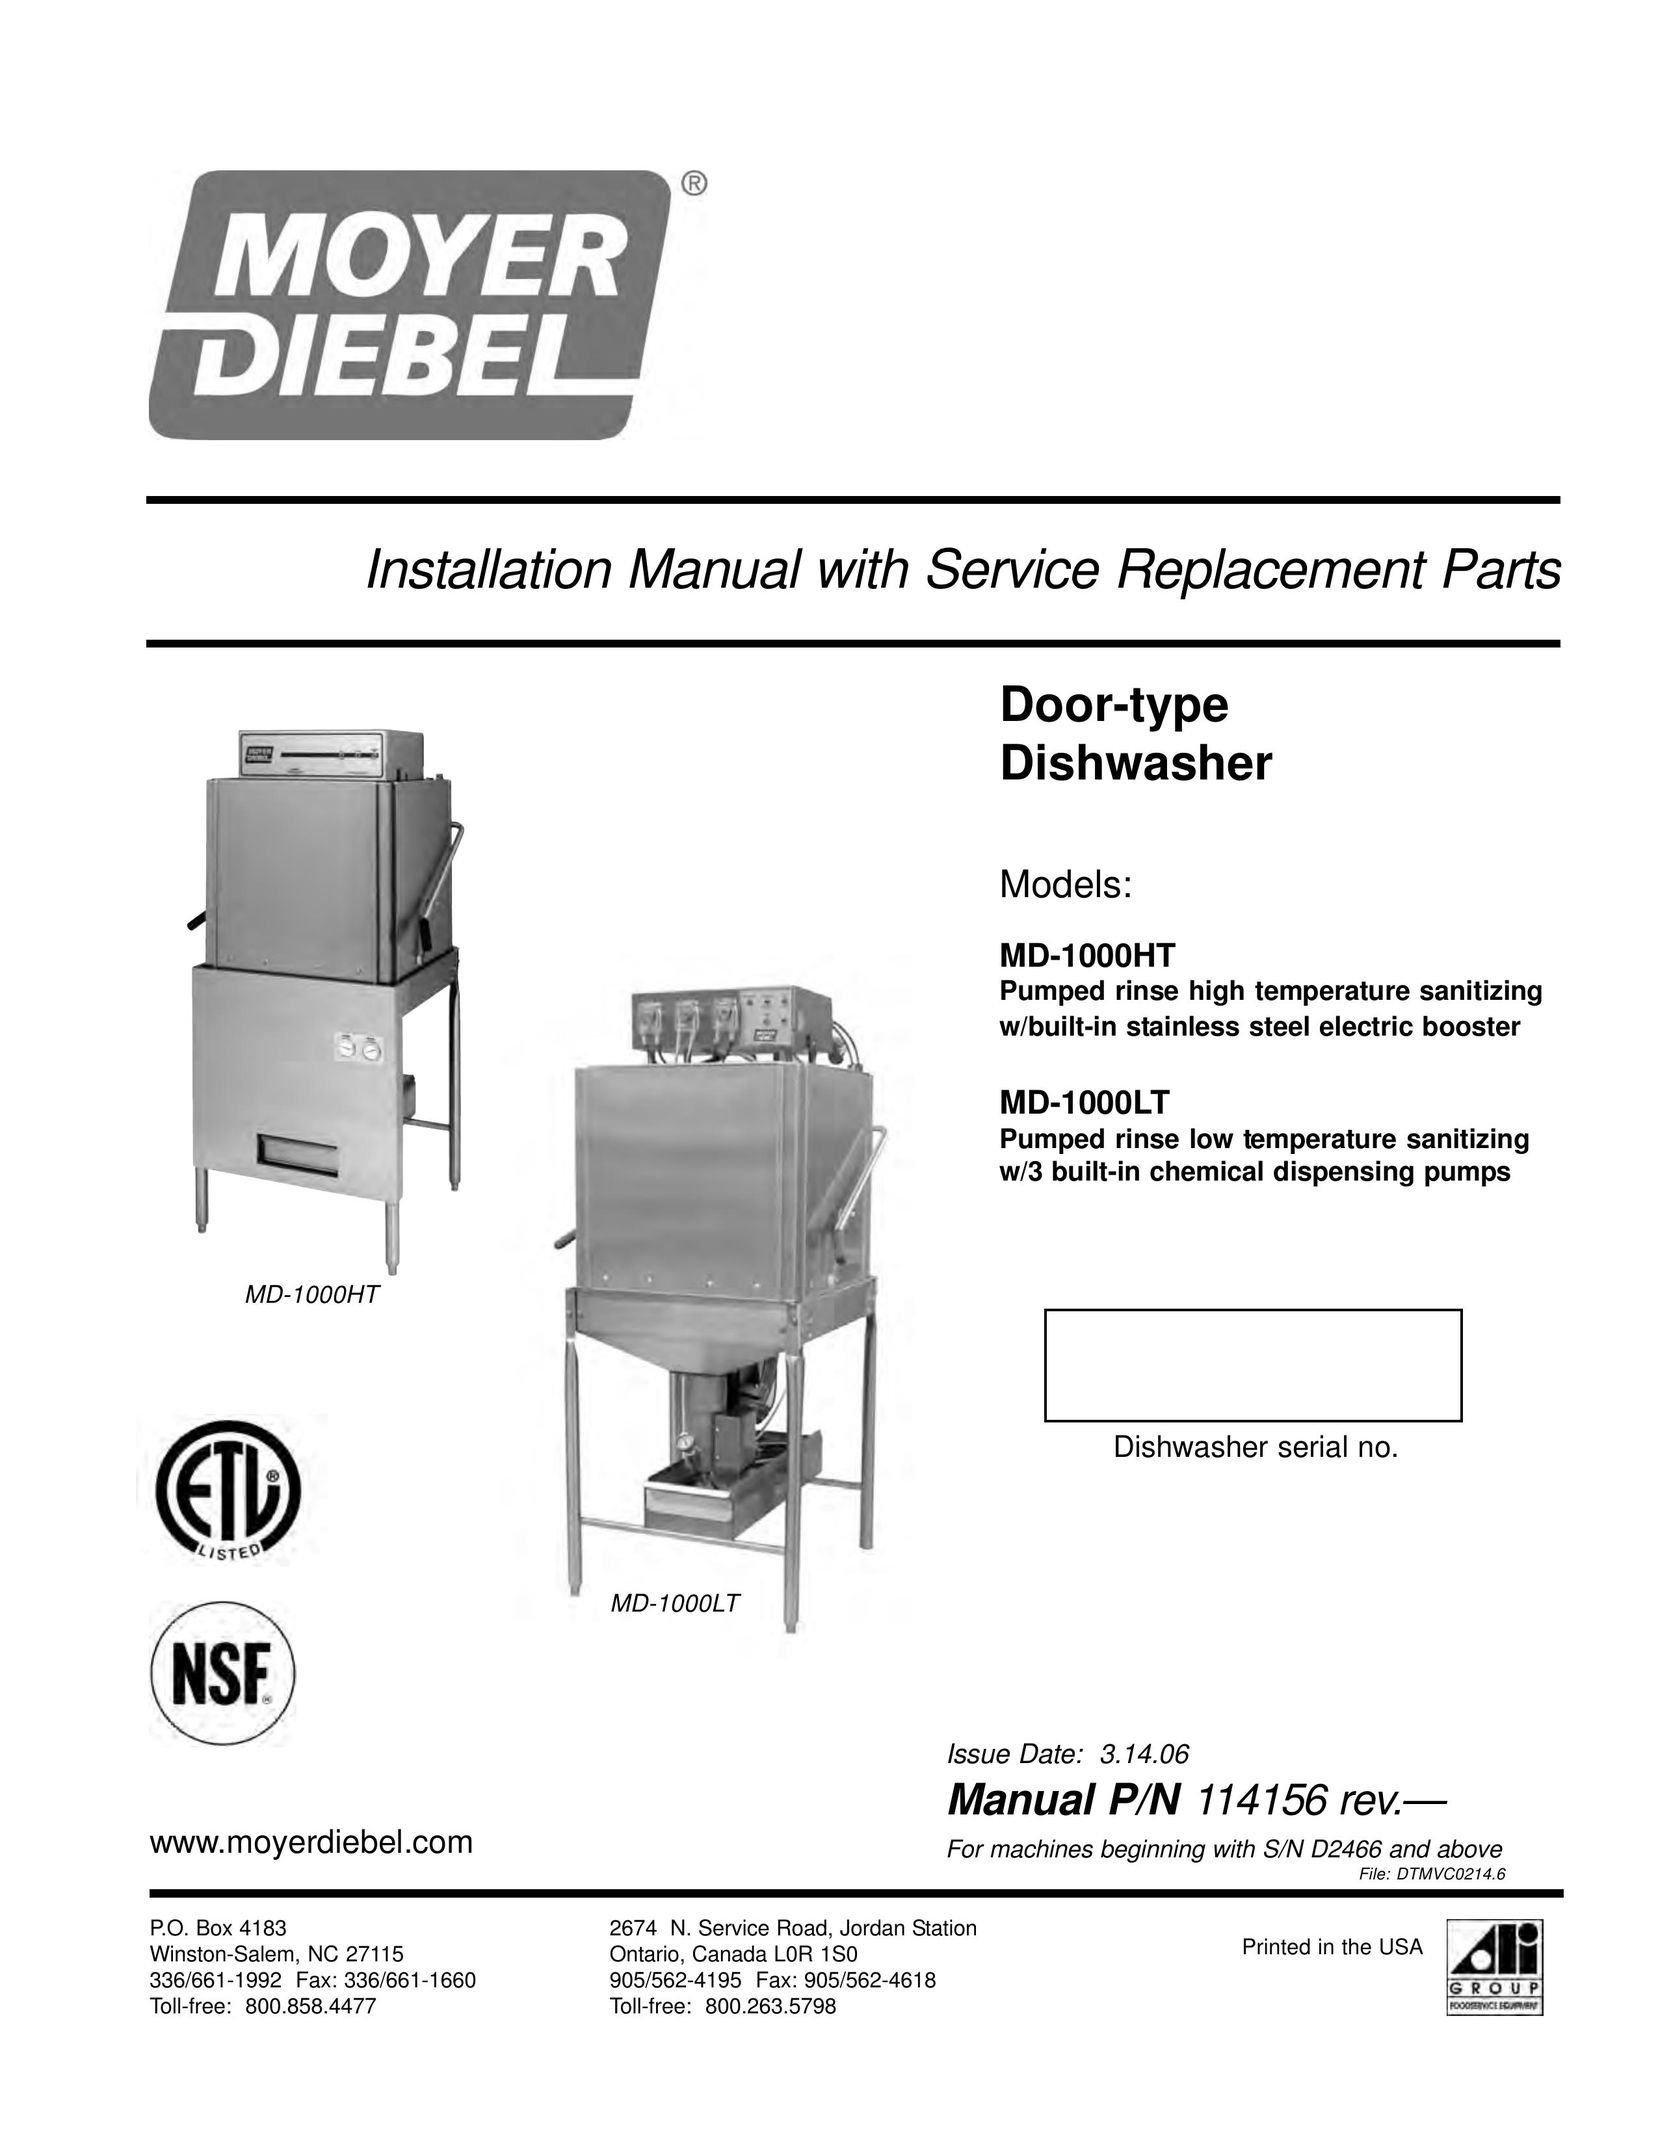 Moyer Diebel MD1000HT Dishwasher User Manual